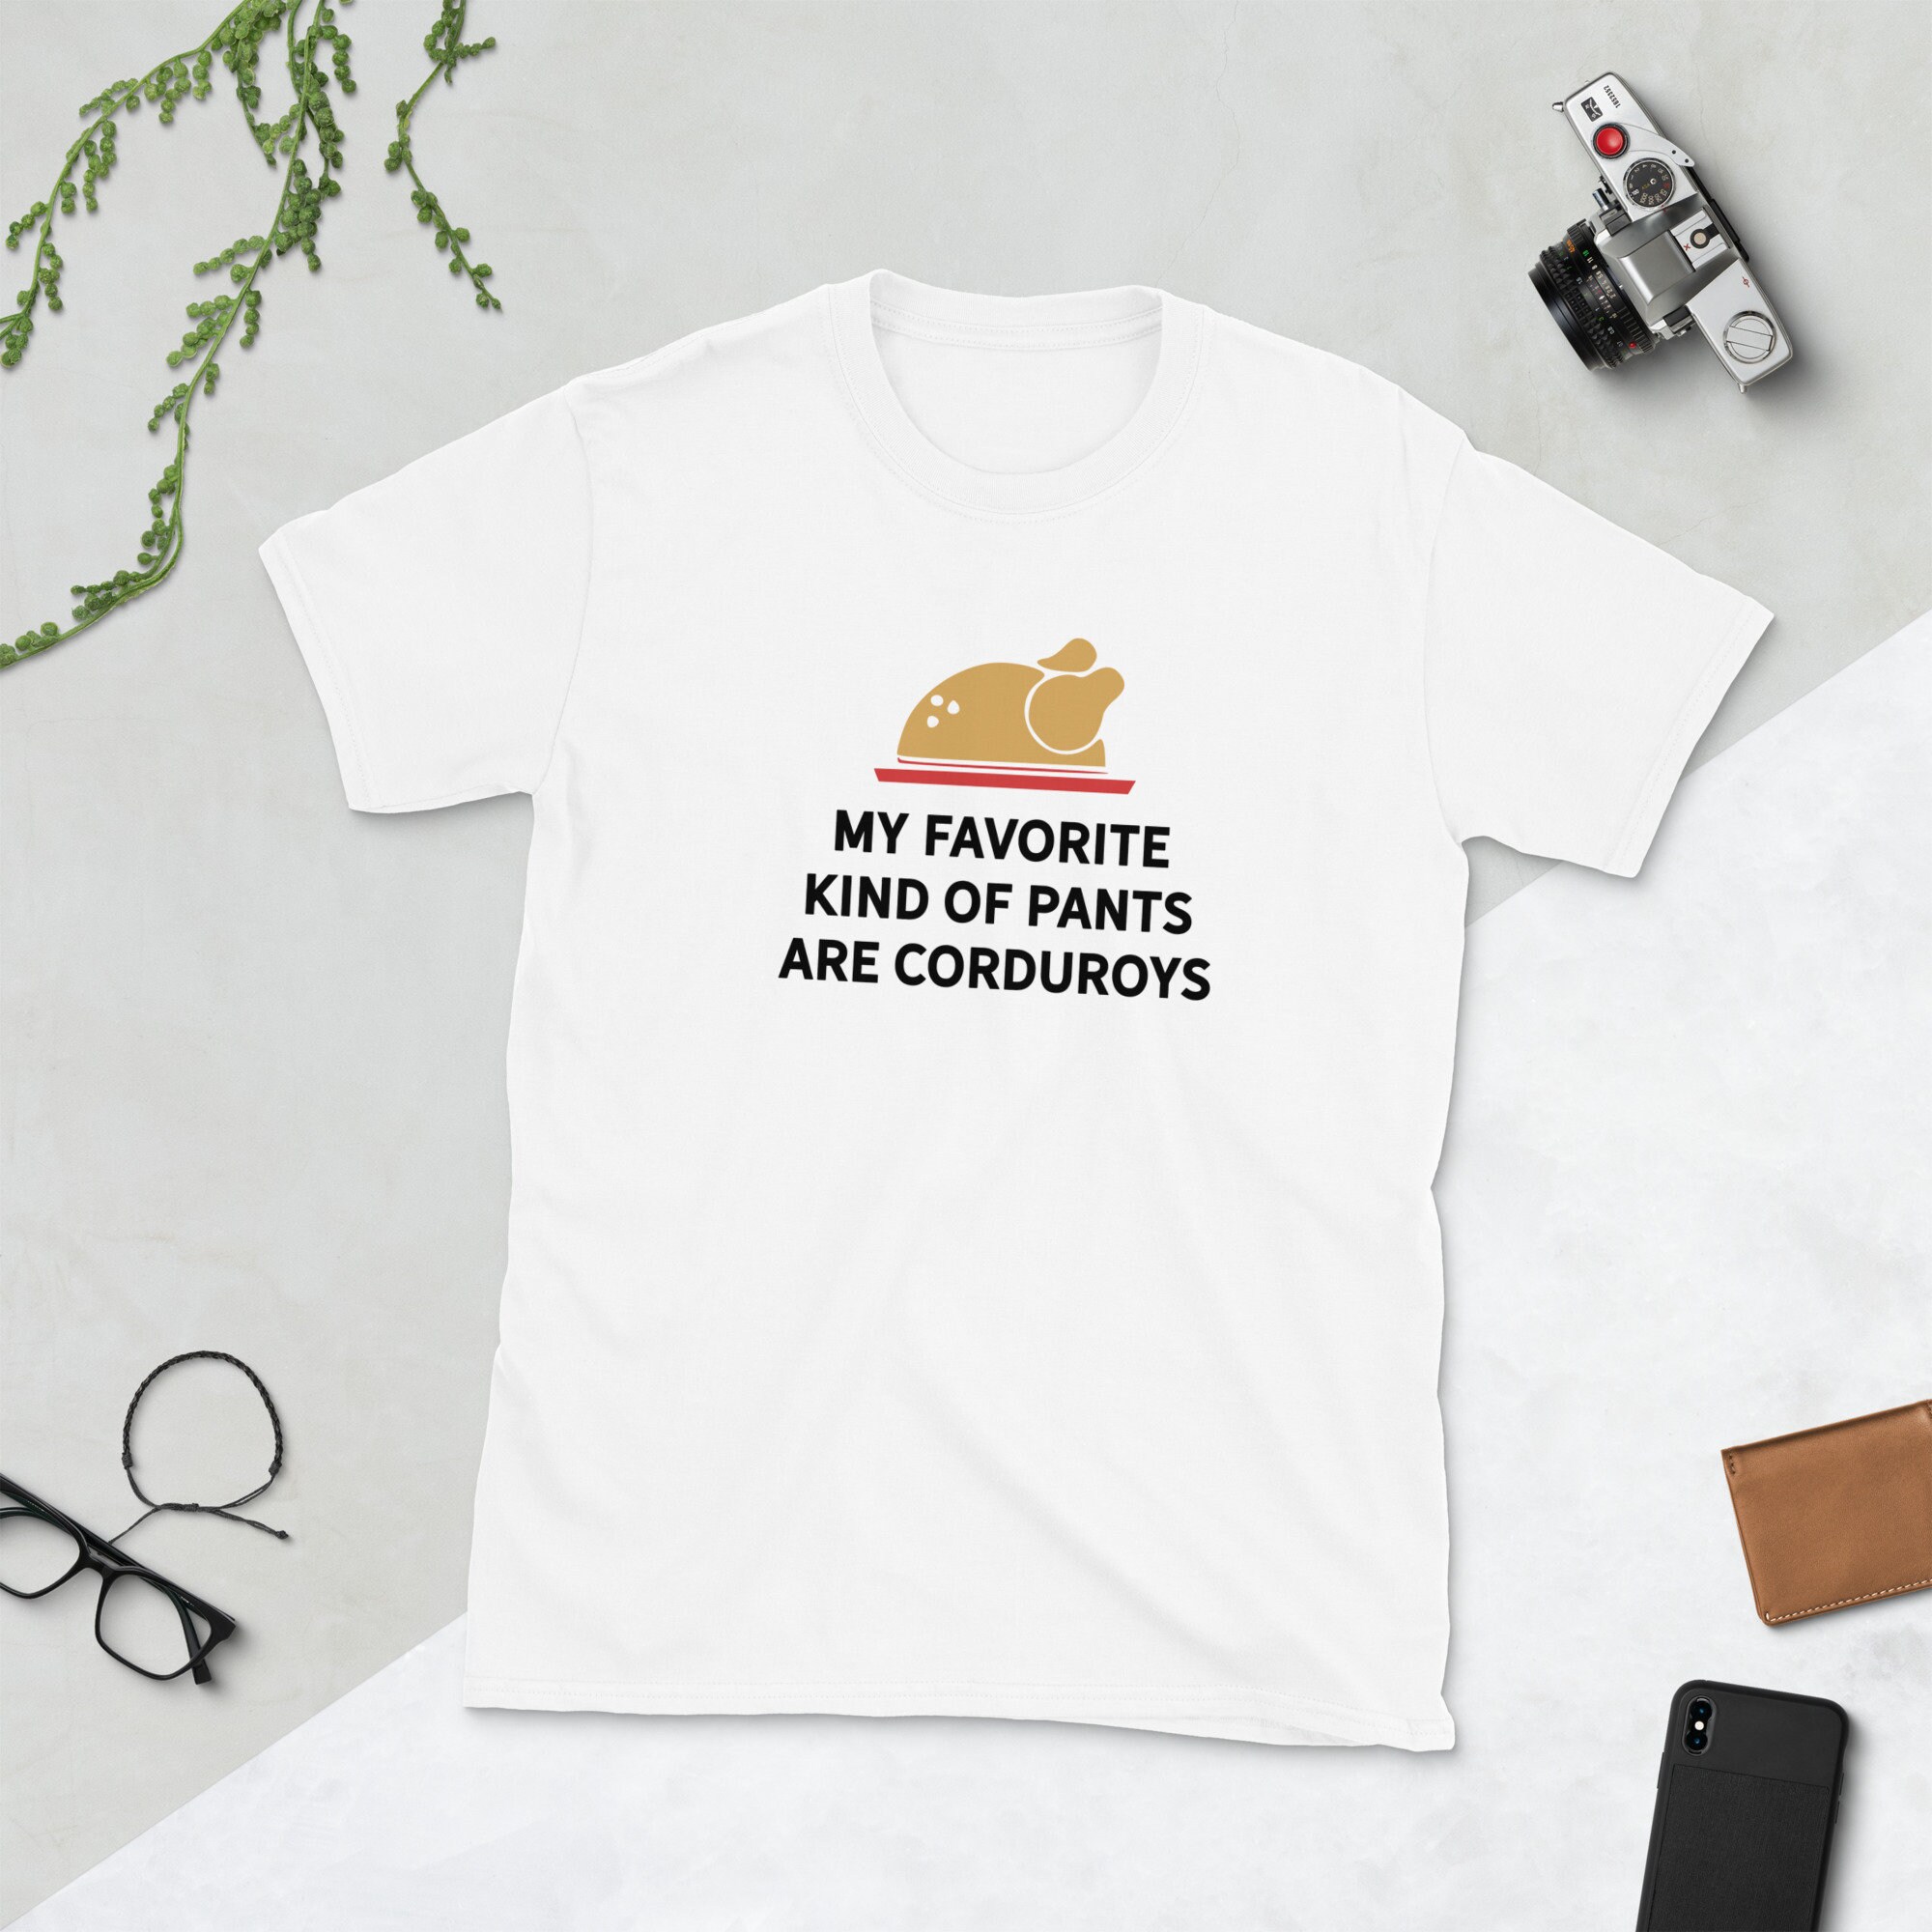 Discover Adam Sandler Shirt | Adam Sandler Graphic Tee | Adam Sandler Movie Shirt